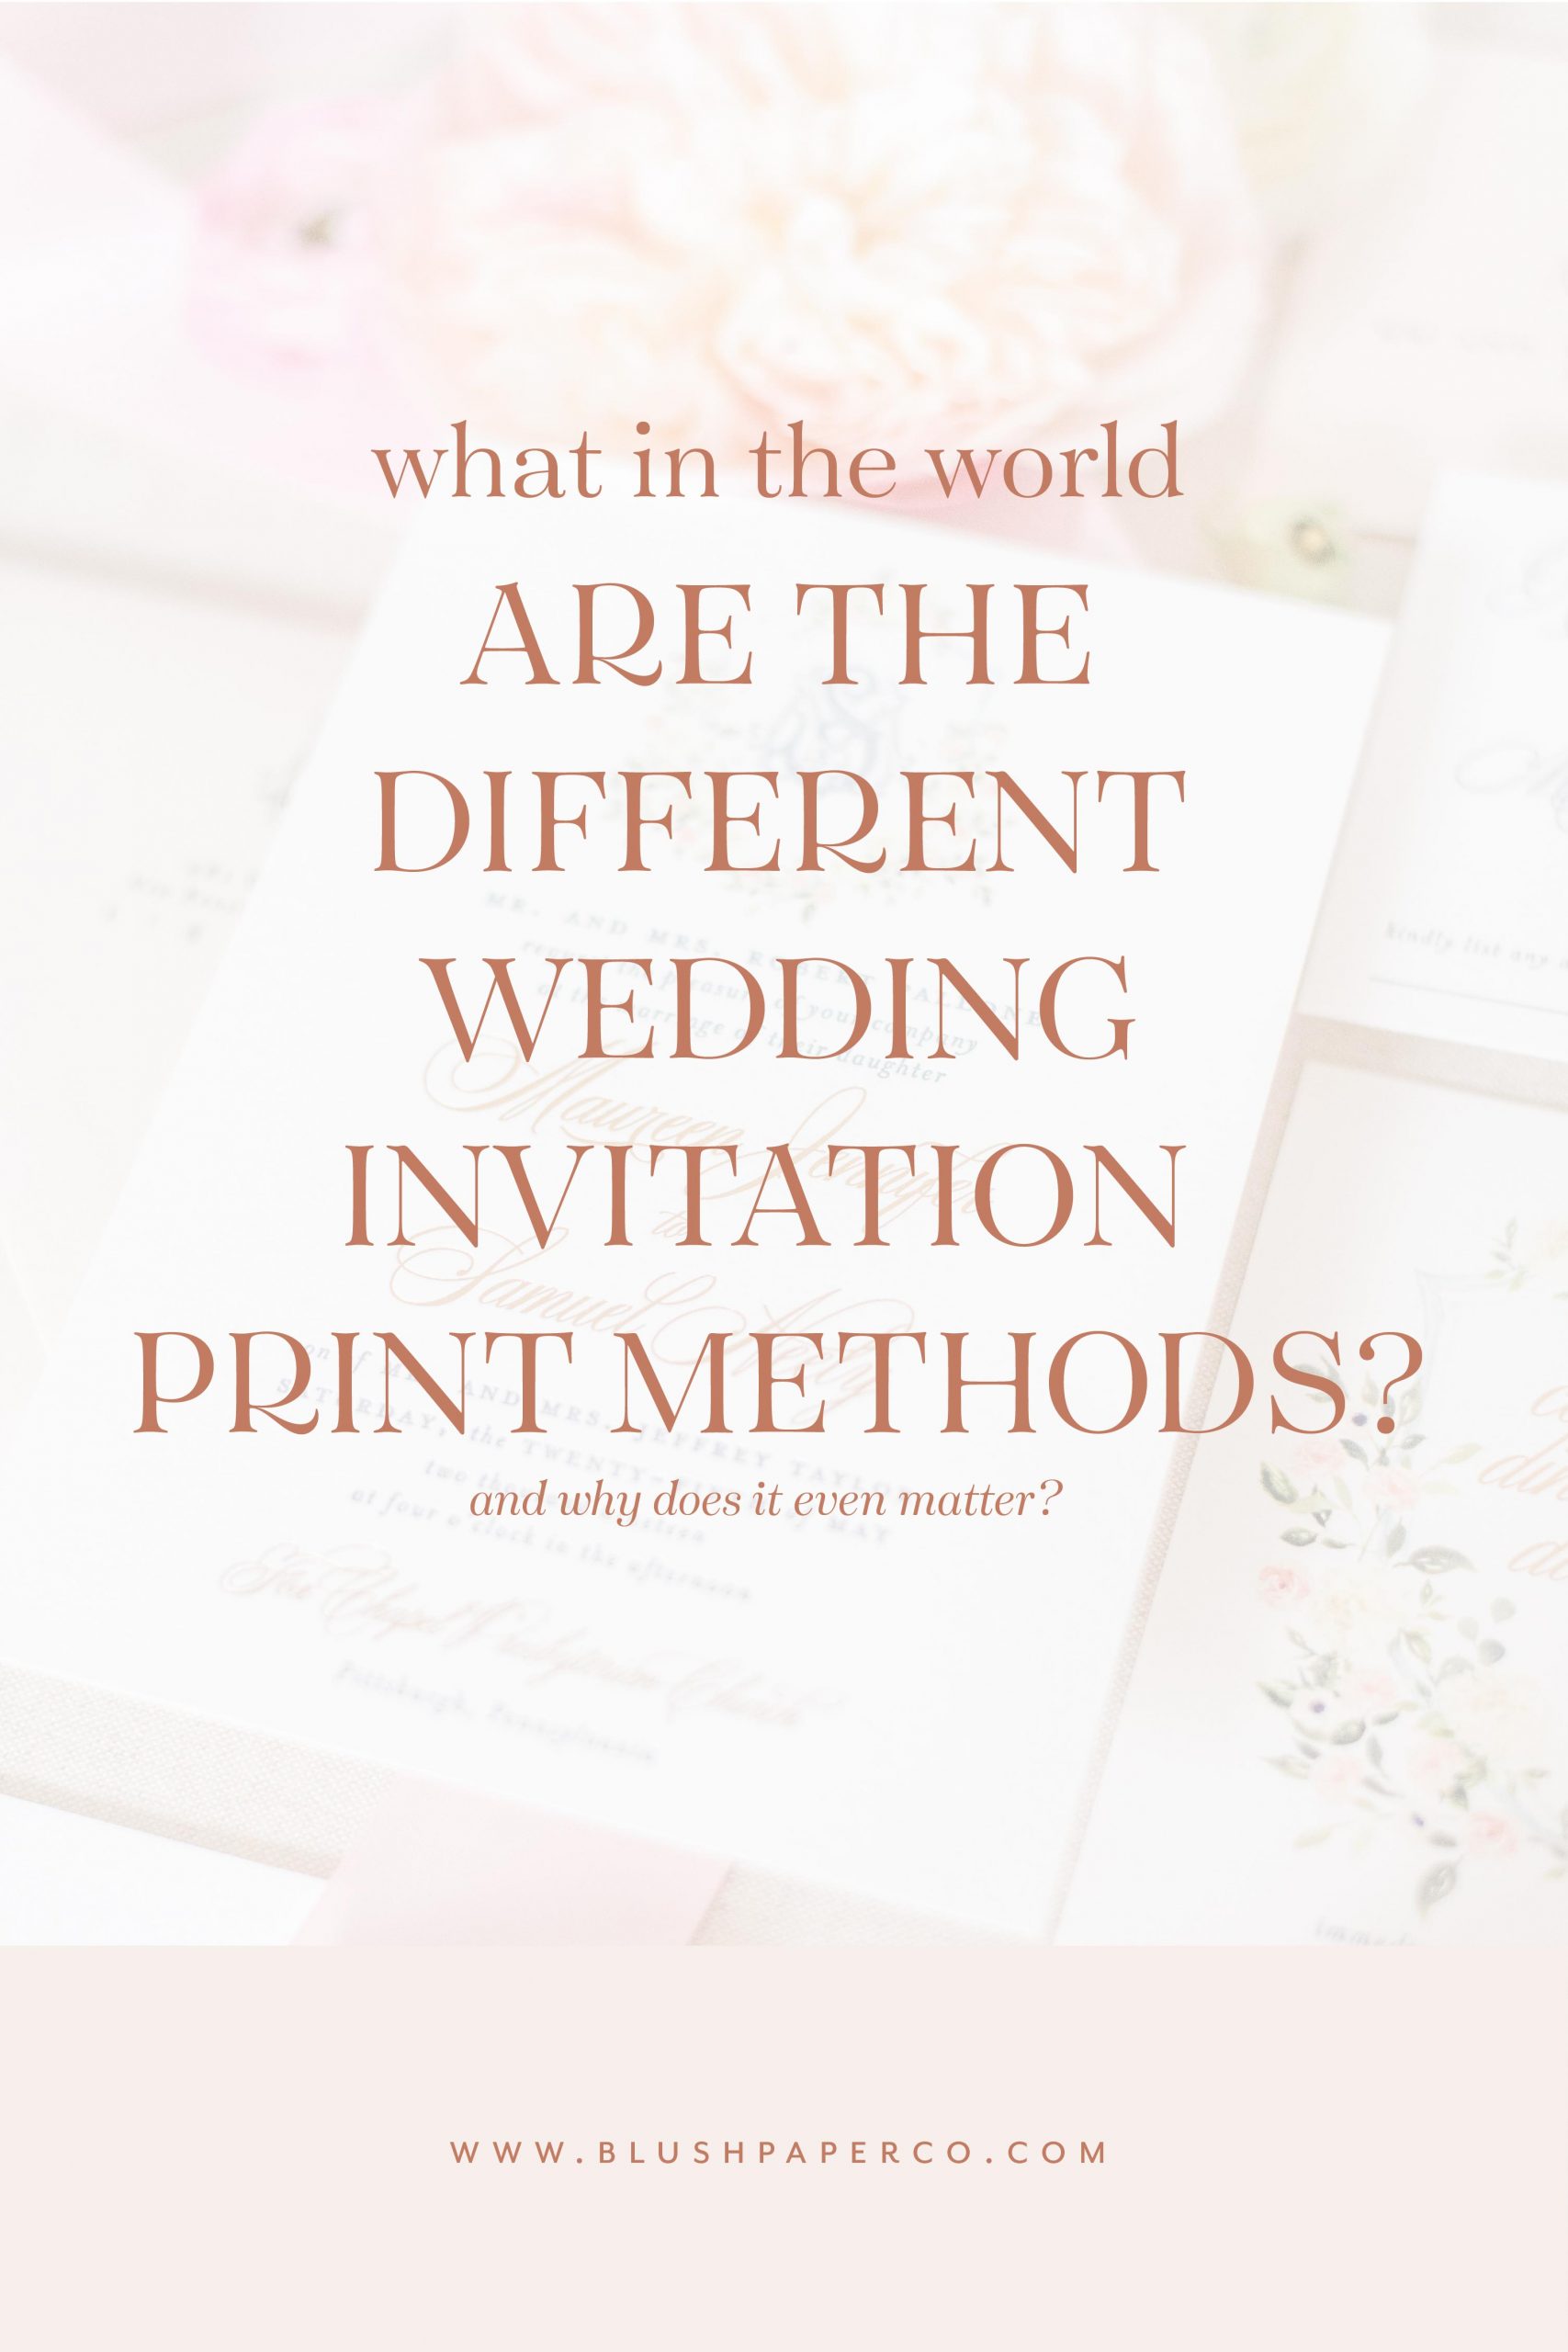 Different Print Methods for Wedding Invitations